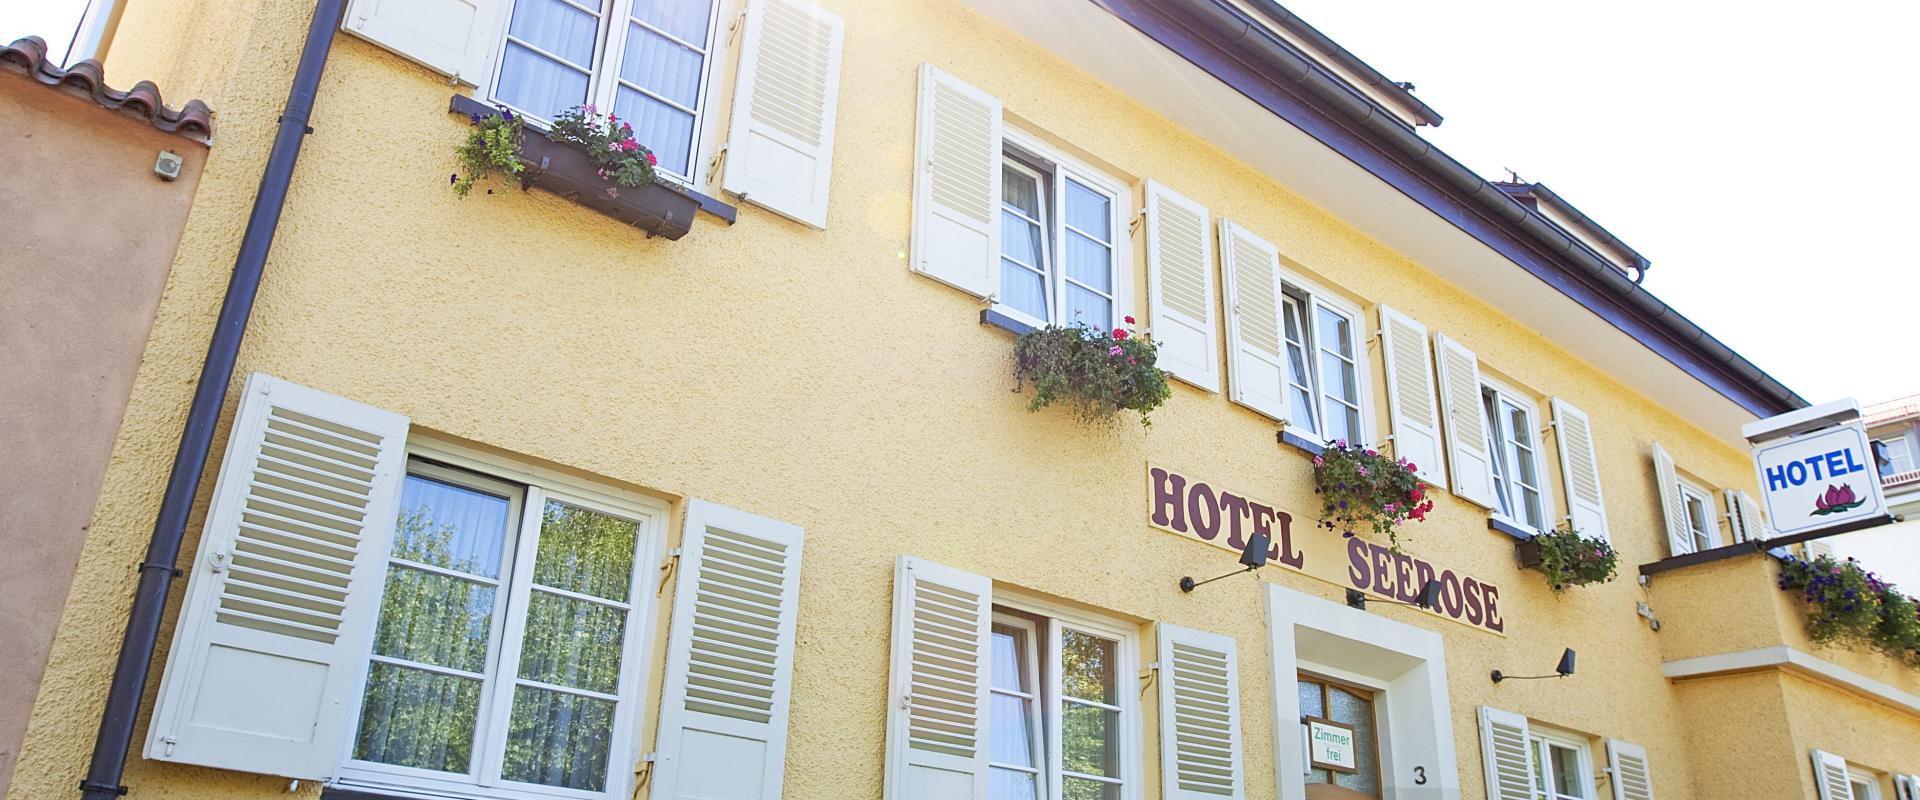 21799 Biker Hotel Seerose am Bodensee/Oberschwaben.jpg